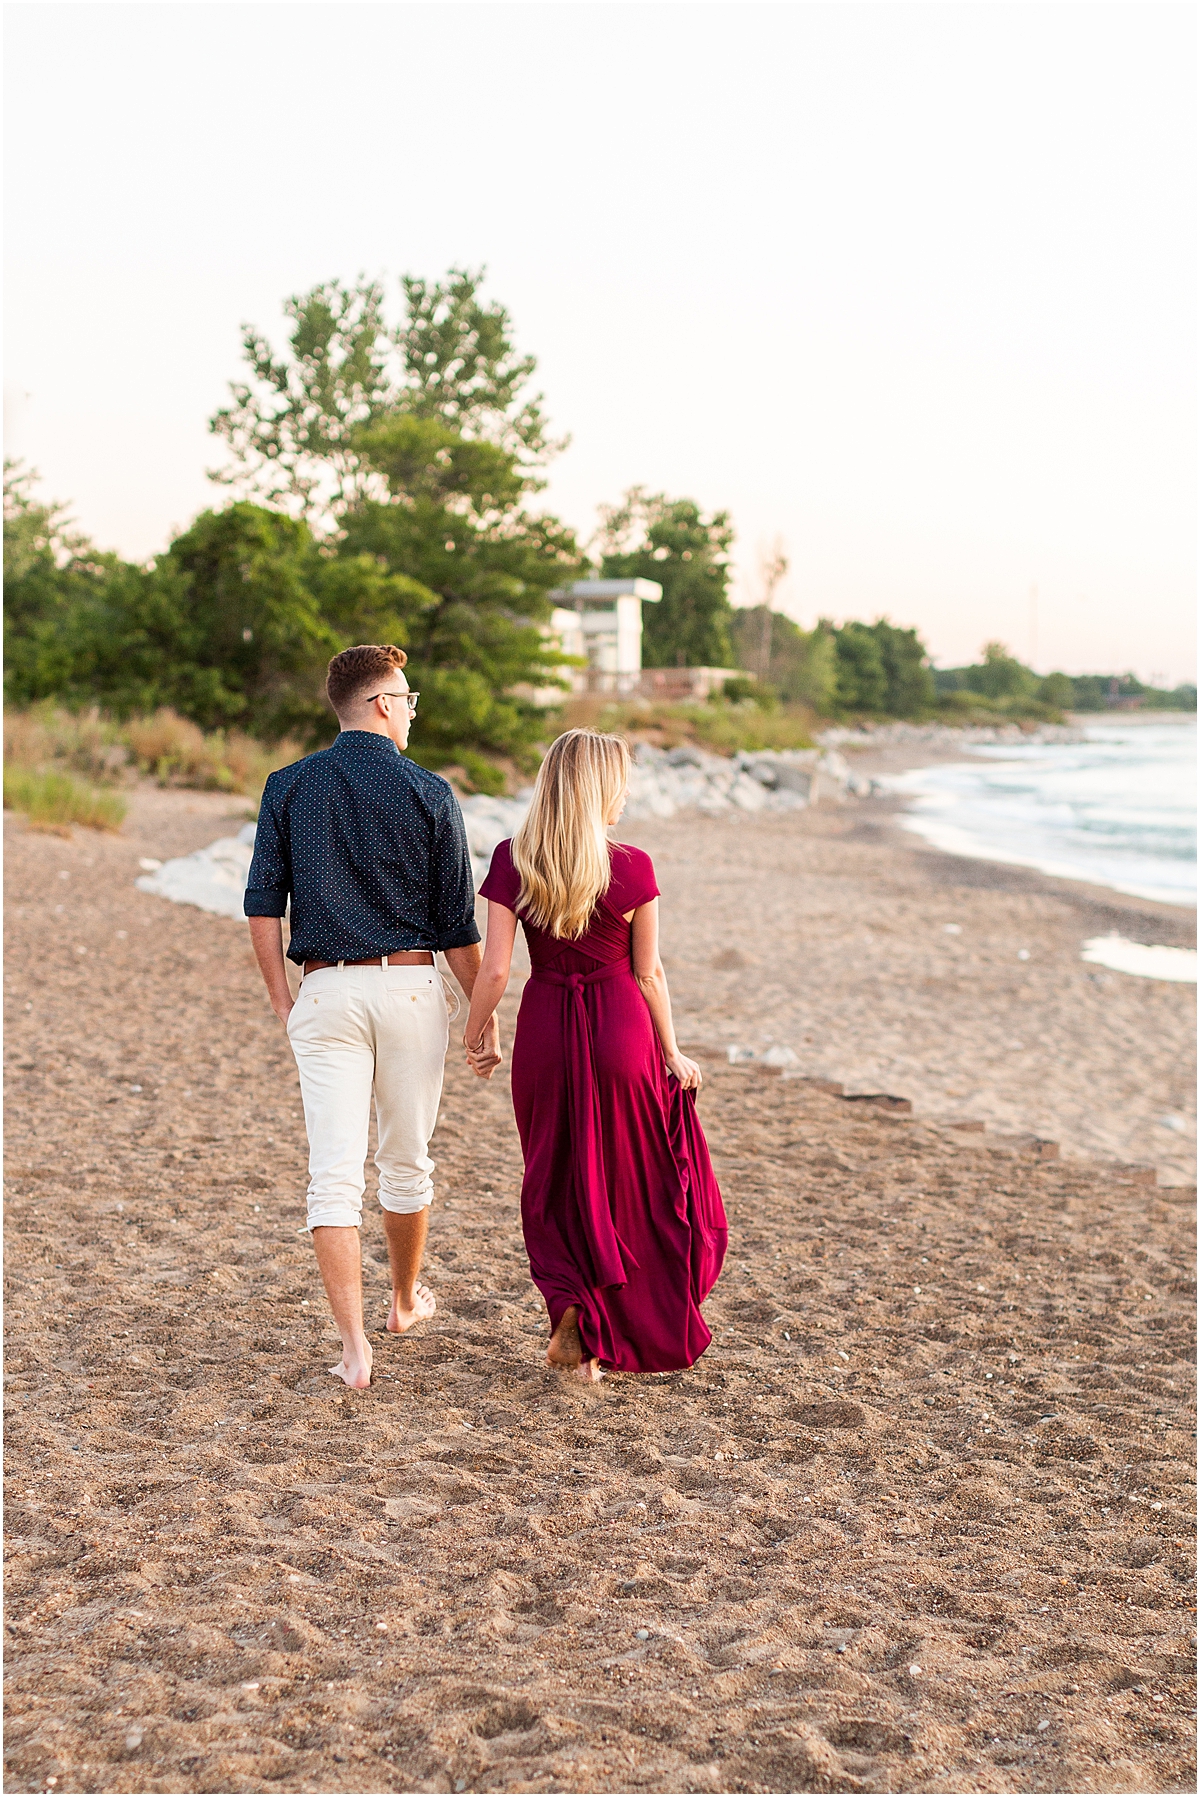 Romantic engagement on the lakeshore beach 